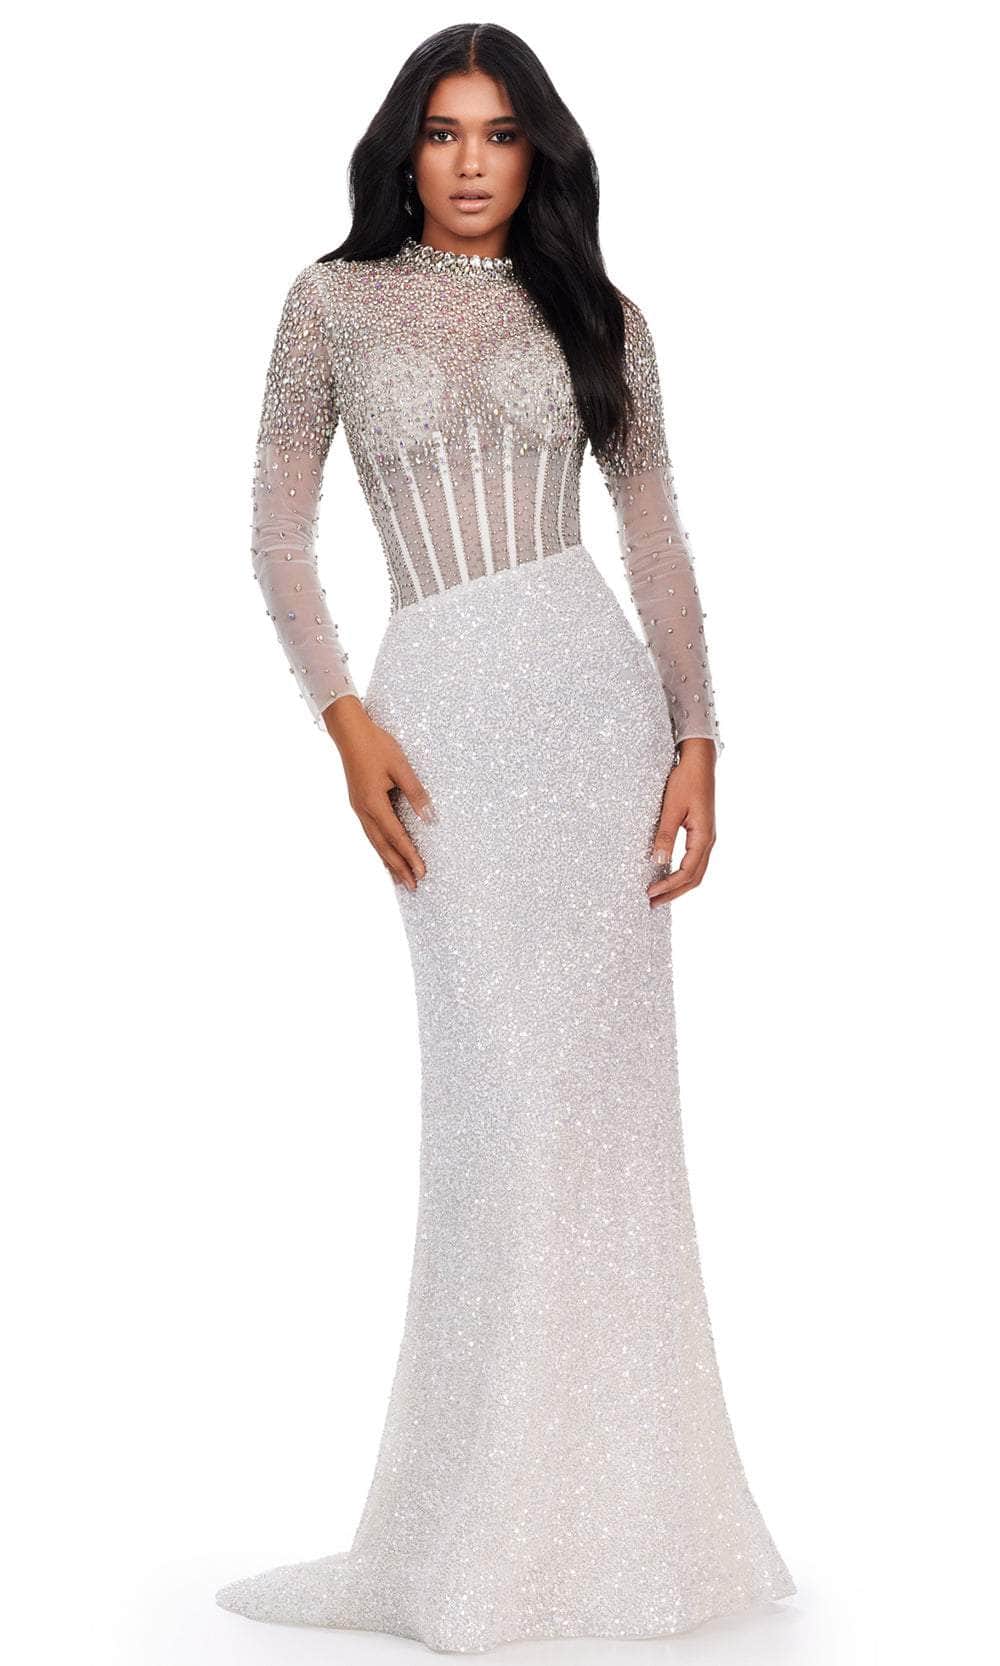 Image of Ashley Lauren 11522 - Illusion Bustier Prom Dress